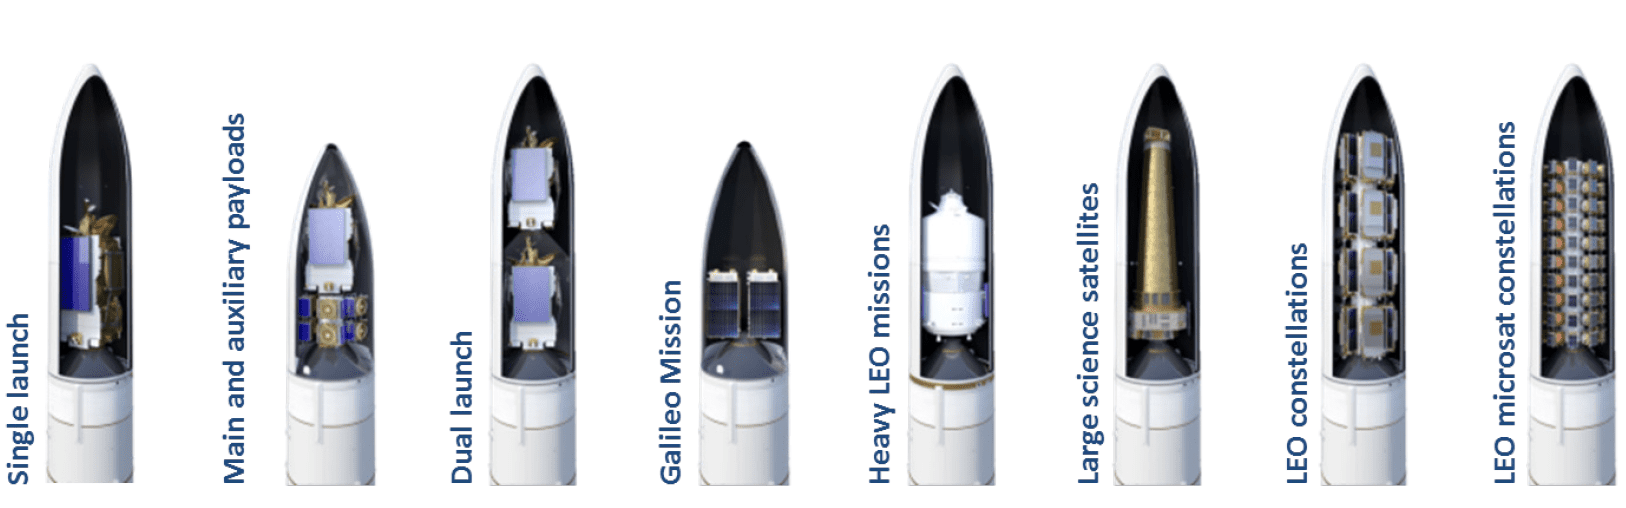 Możliwe misje i konfiguracje Ariane 6. Ilustracja: ArianeGroup